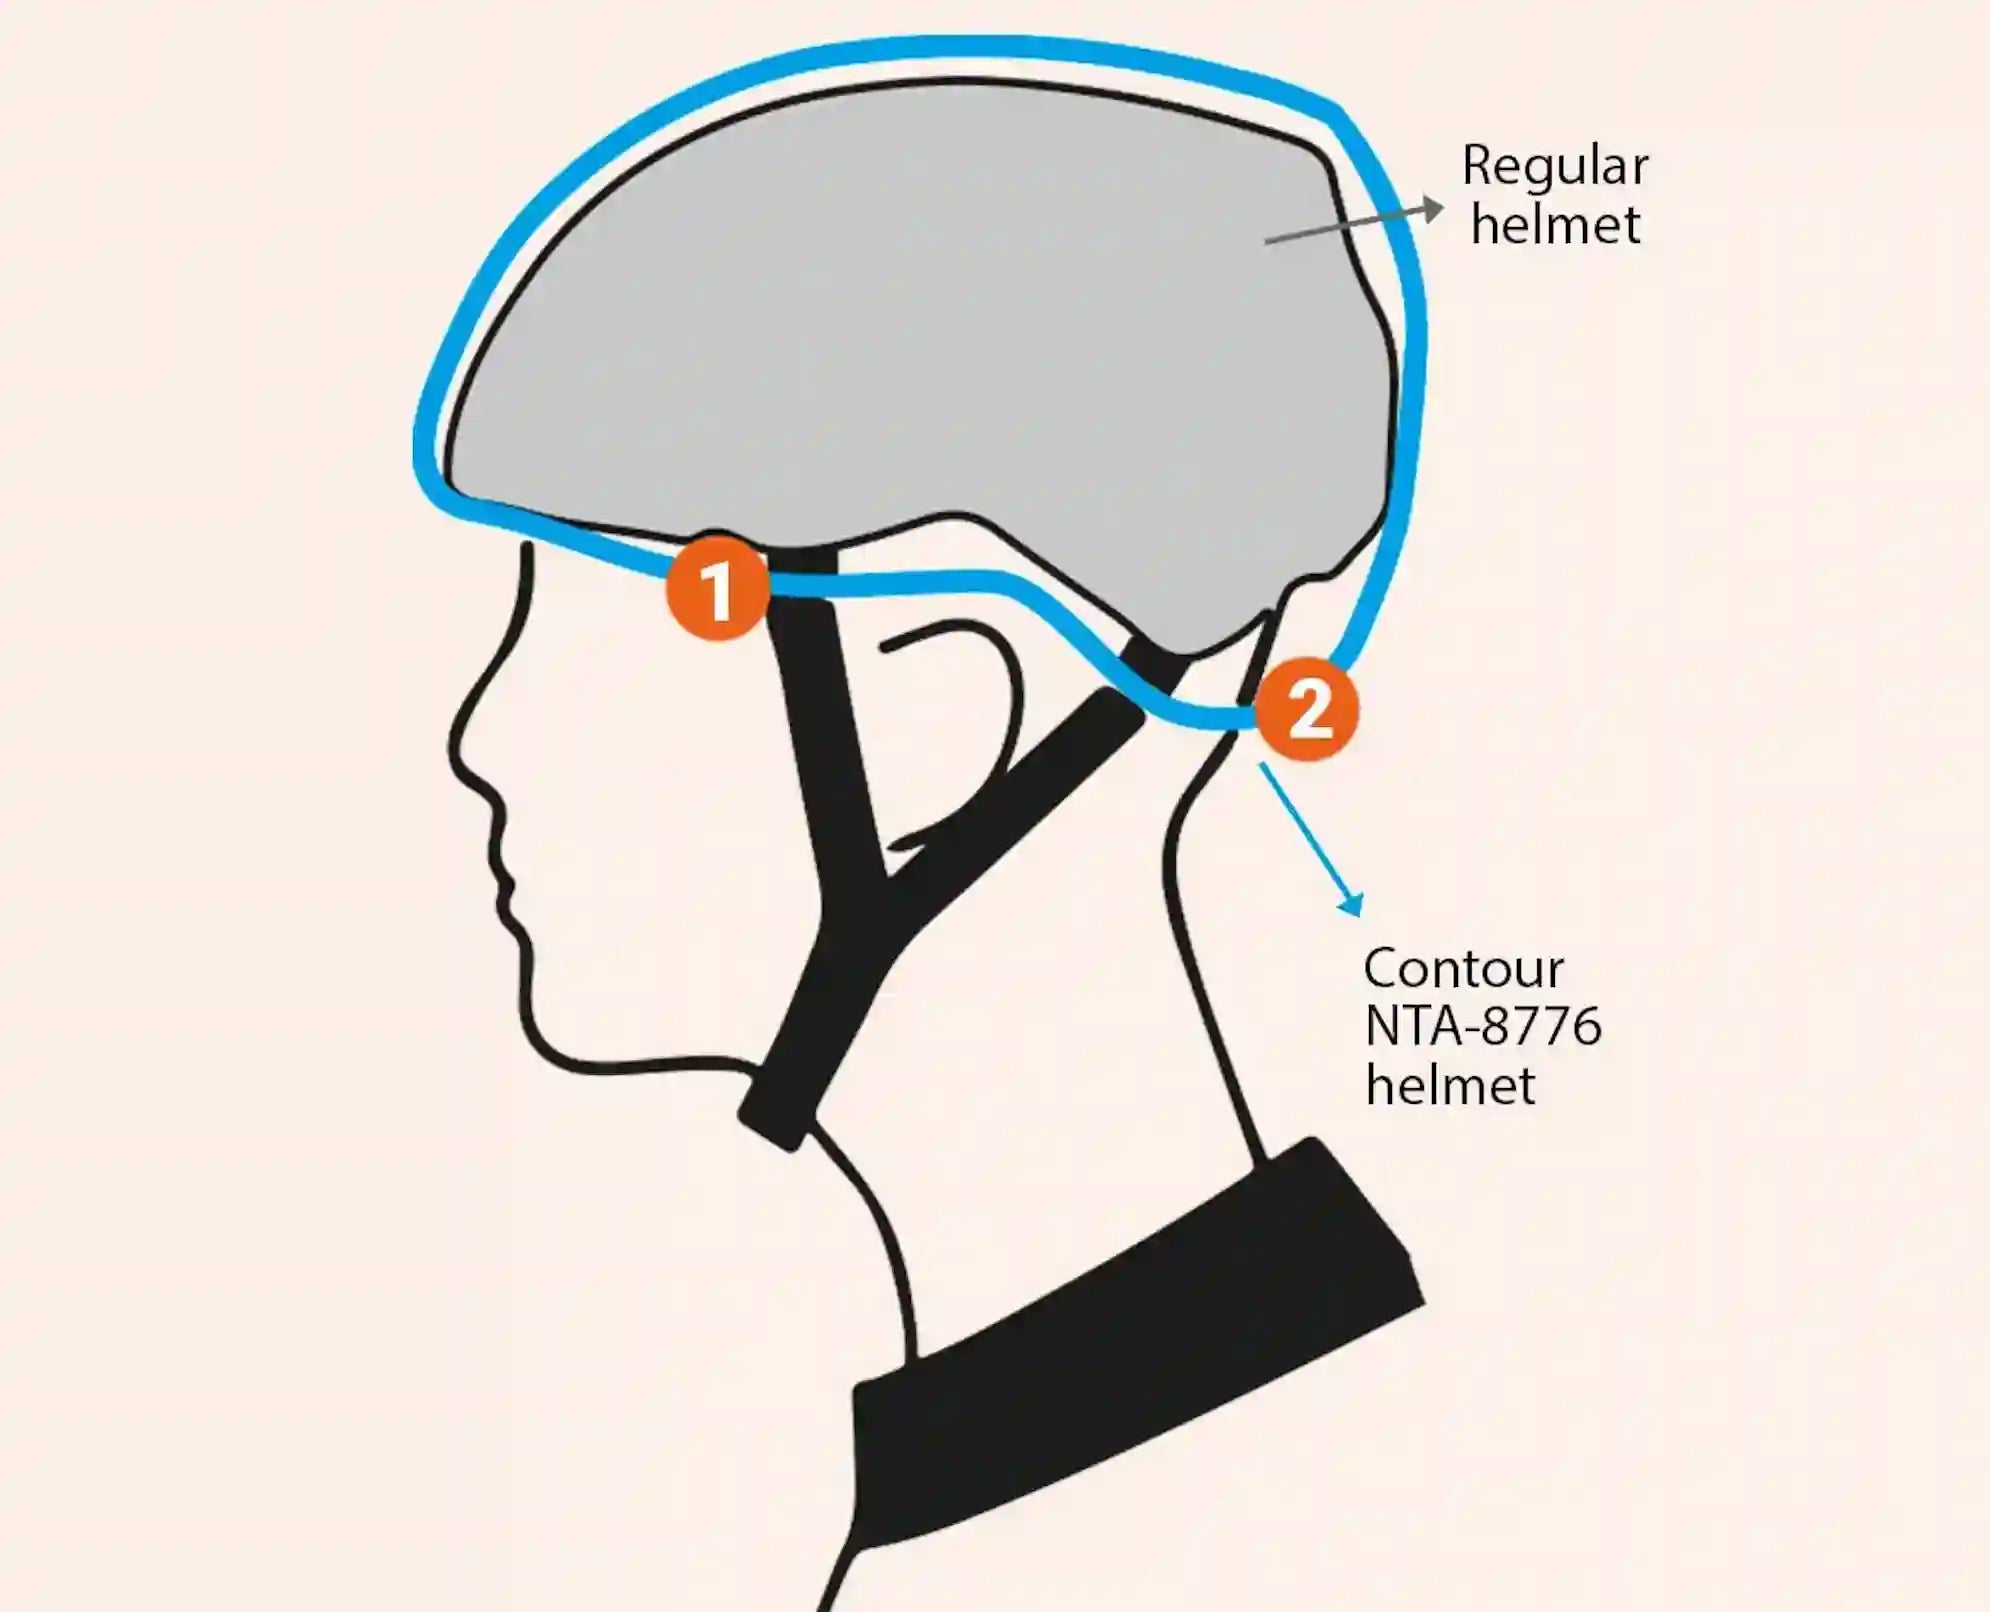 NTA helmet comparative